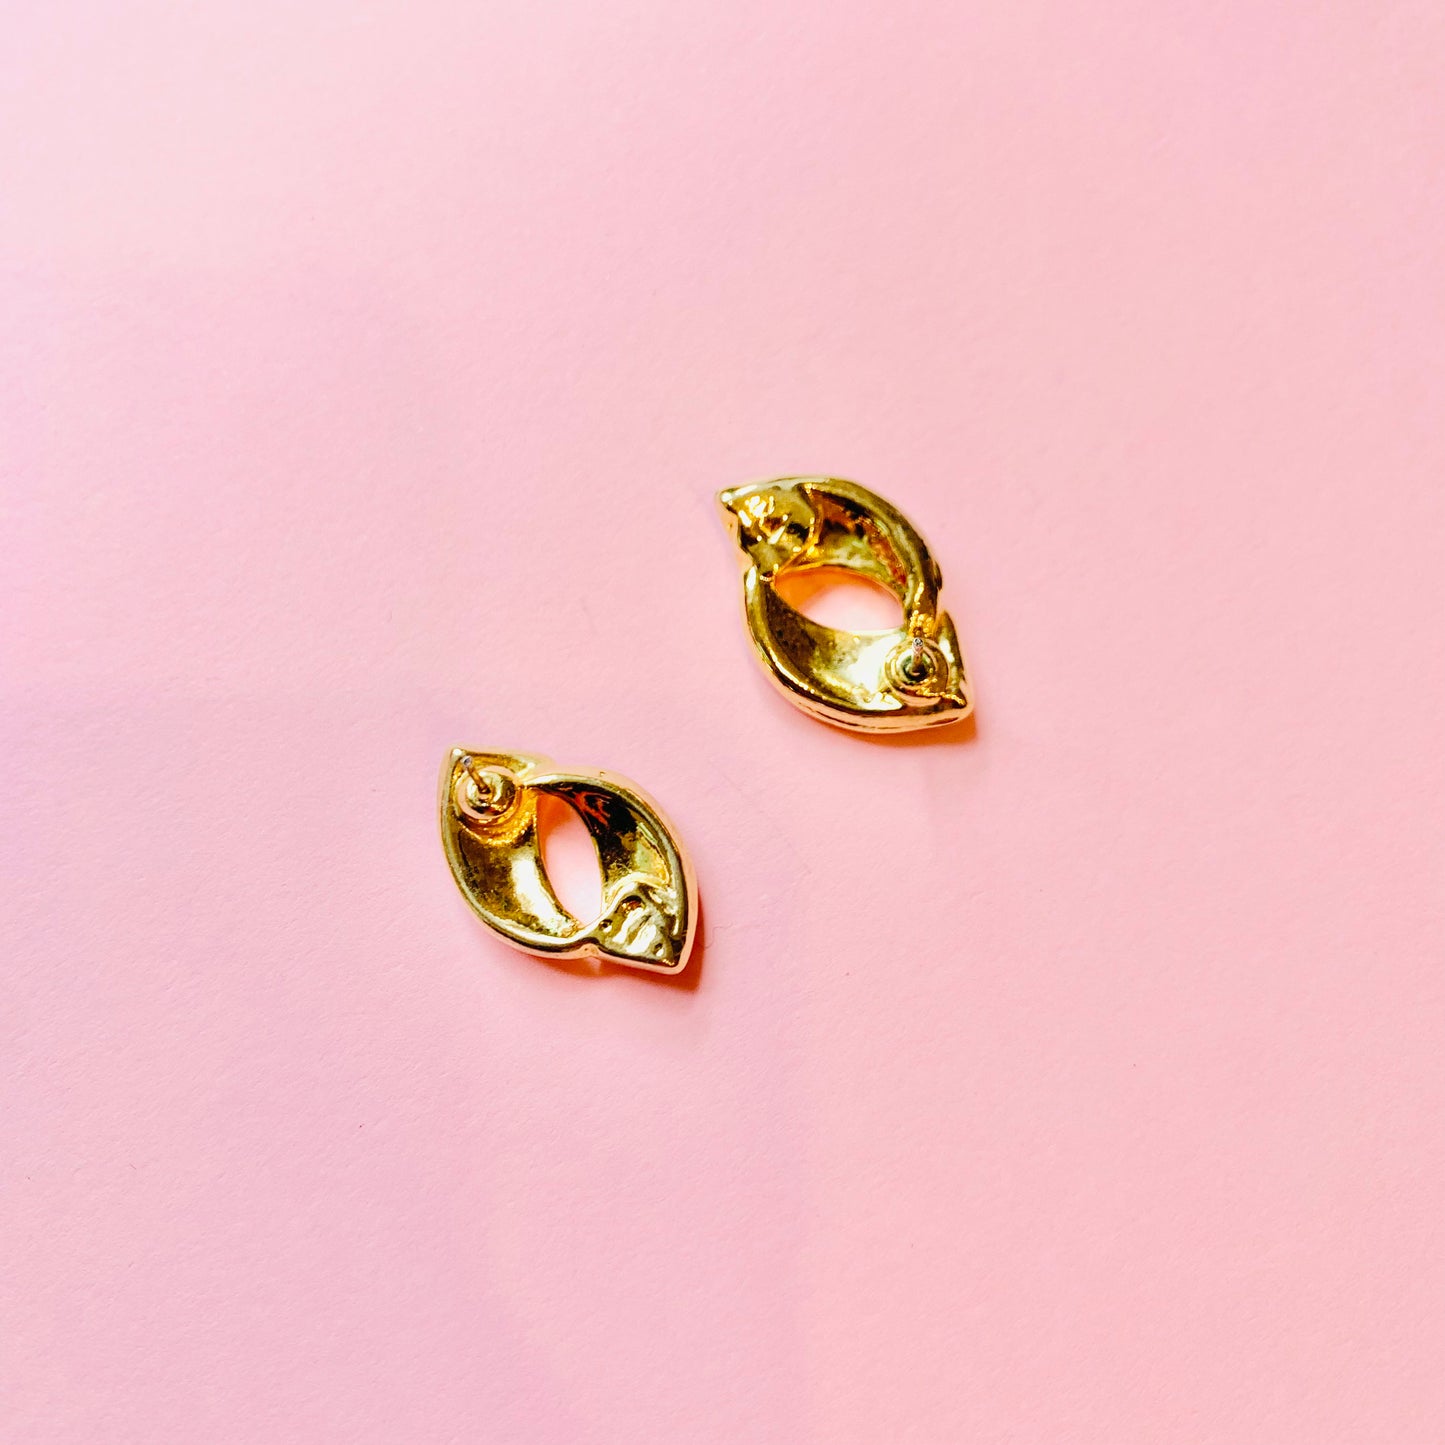 1960s gold plated black enamel stud earrings with rhinestones halo